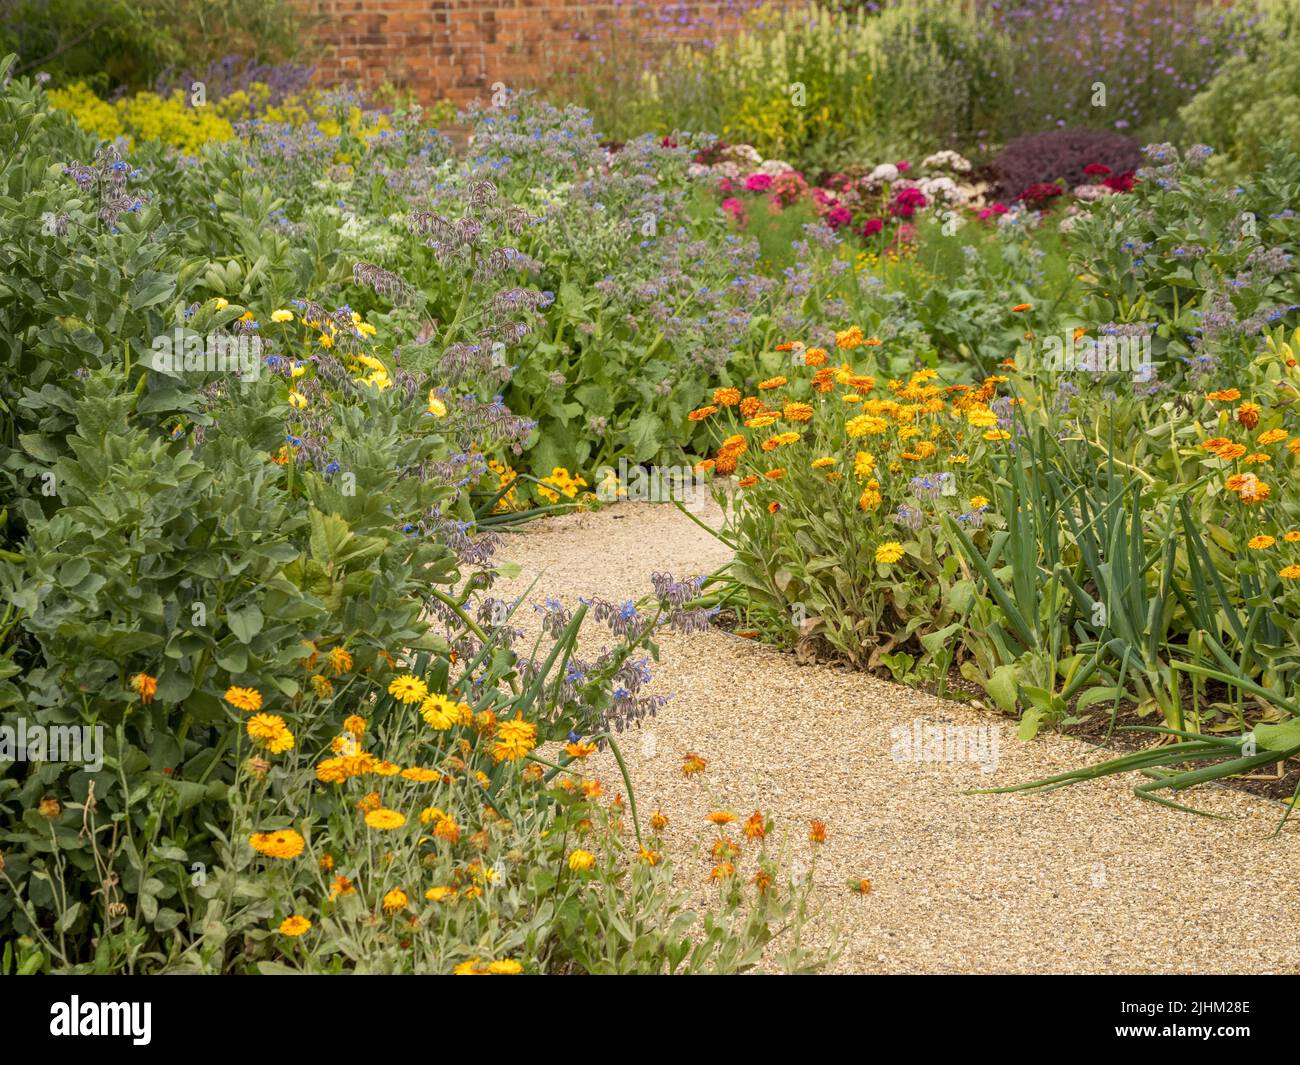 Gravel path winding through flower beds in a UK garden. Stock Photo